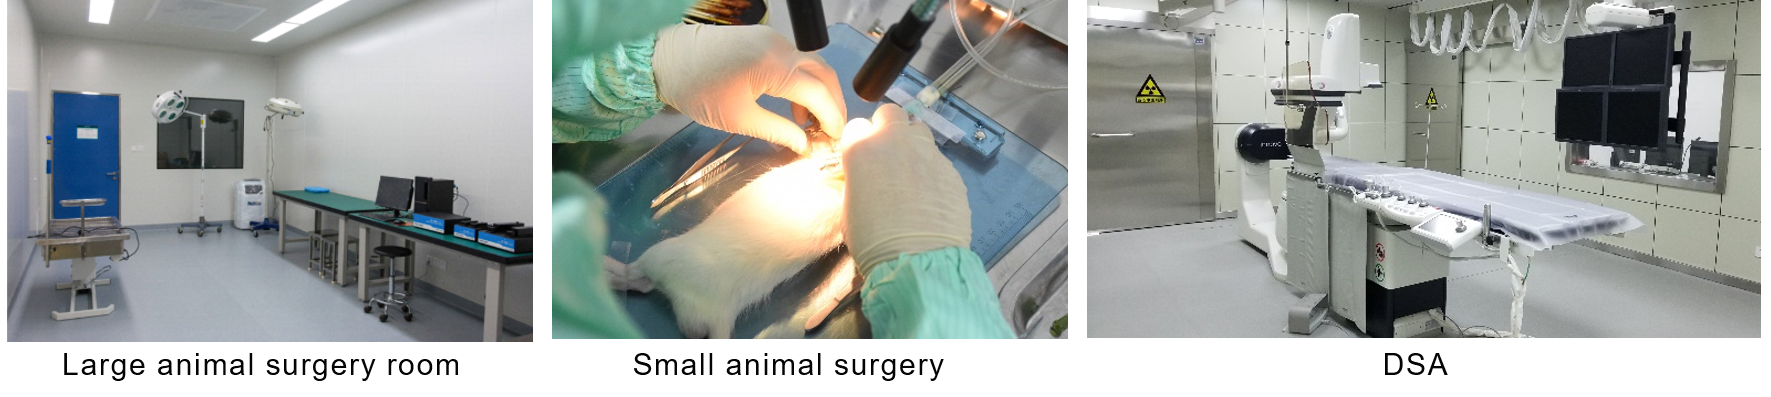 Animal surgery rooms at Greentech Bioscience.png